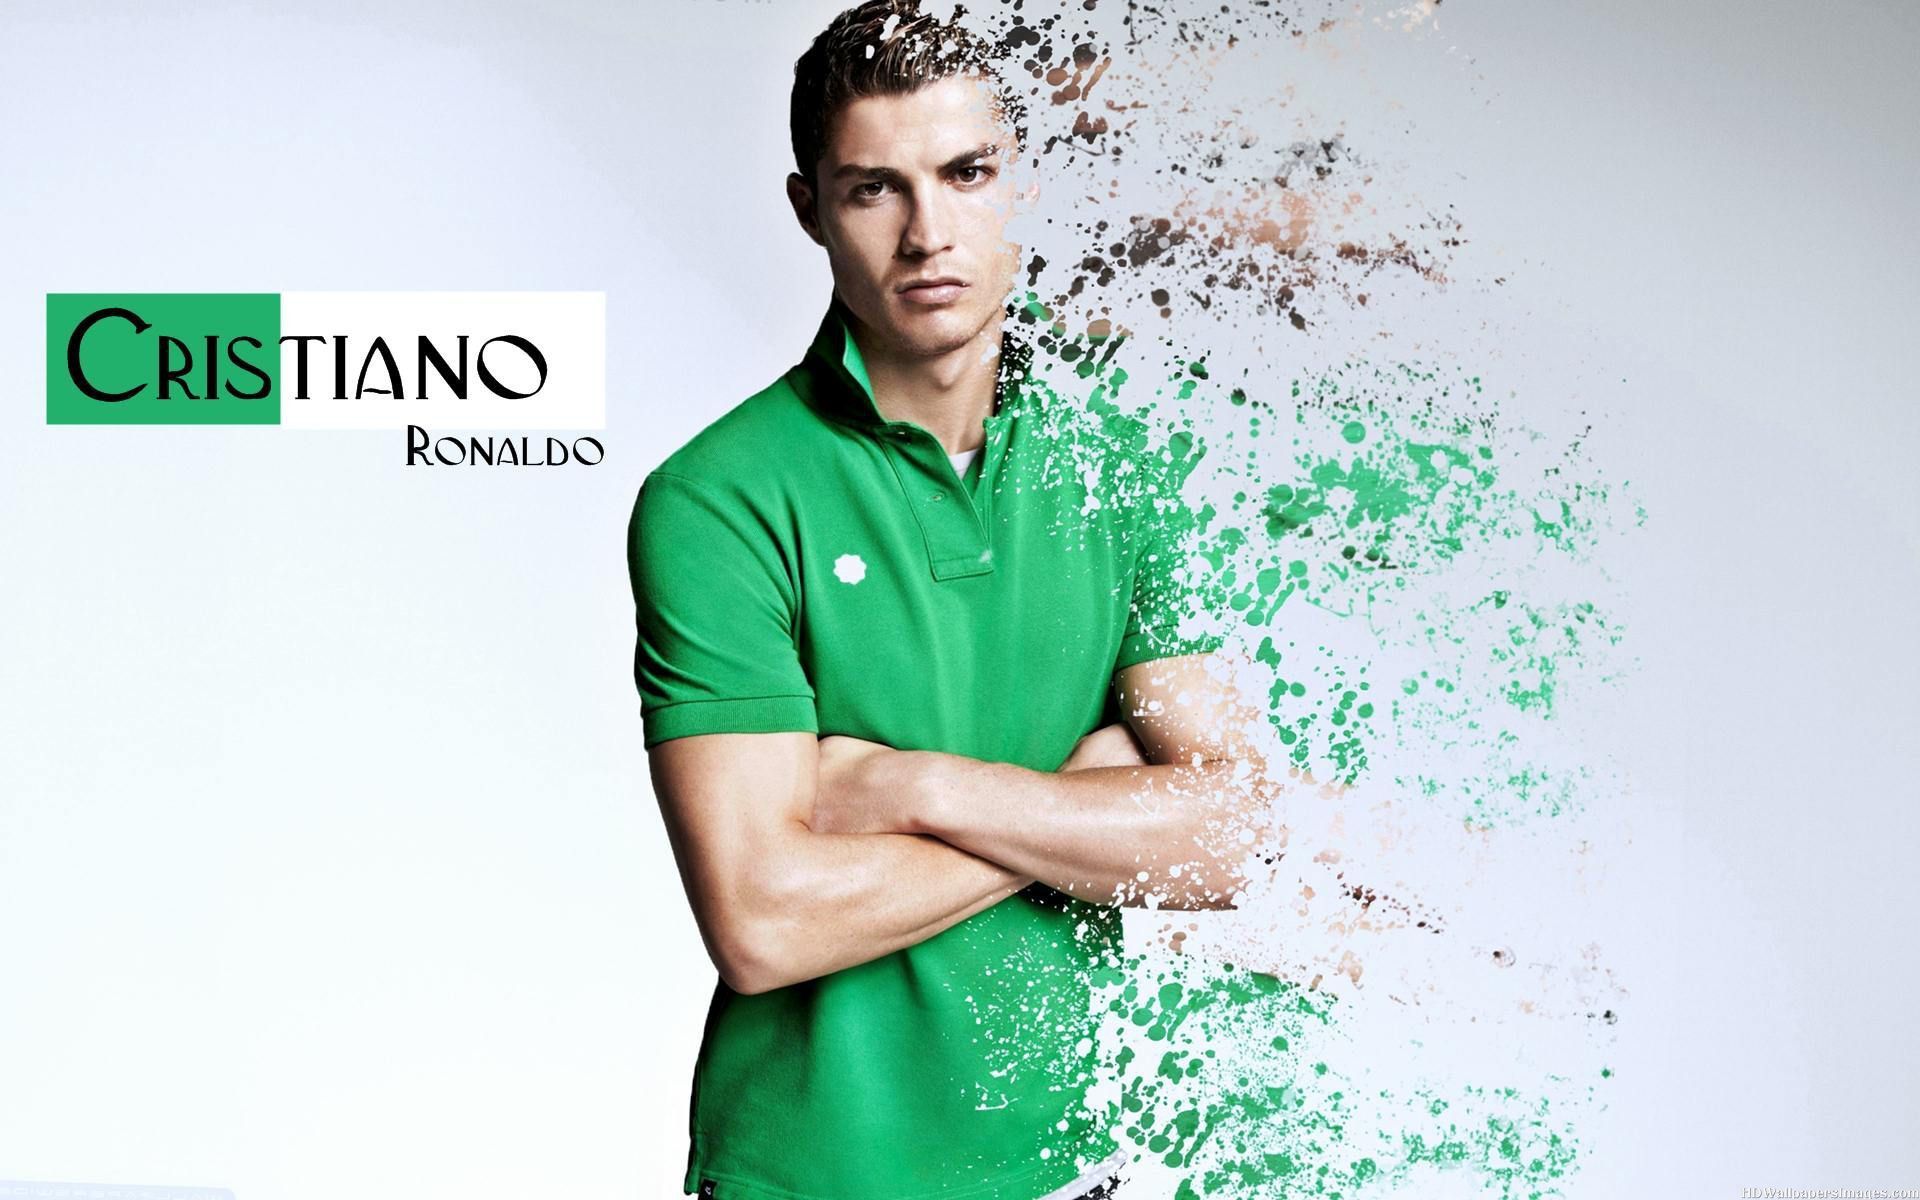 Cristiano Ronaldo in green shirt wallpaper - Cristiano Ronaldo ...